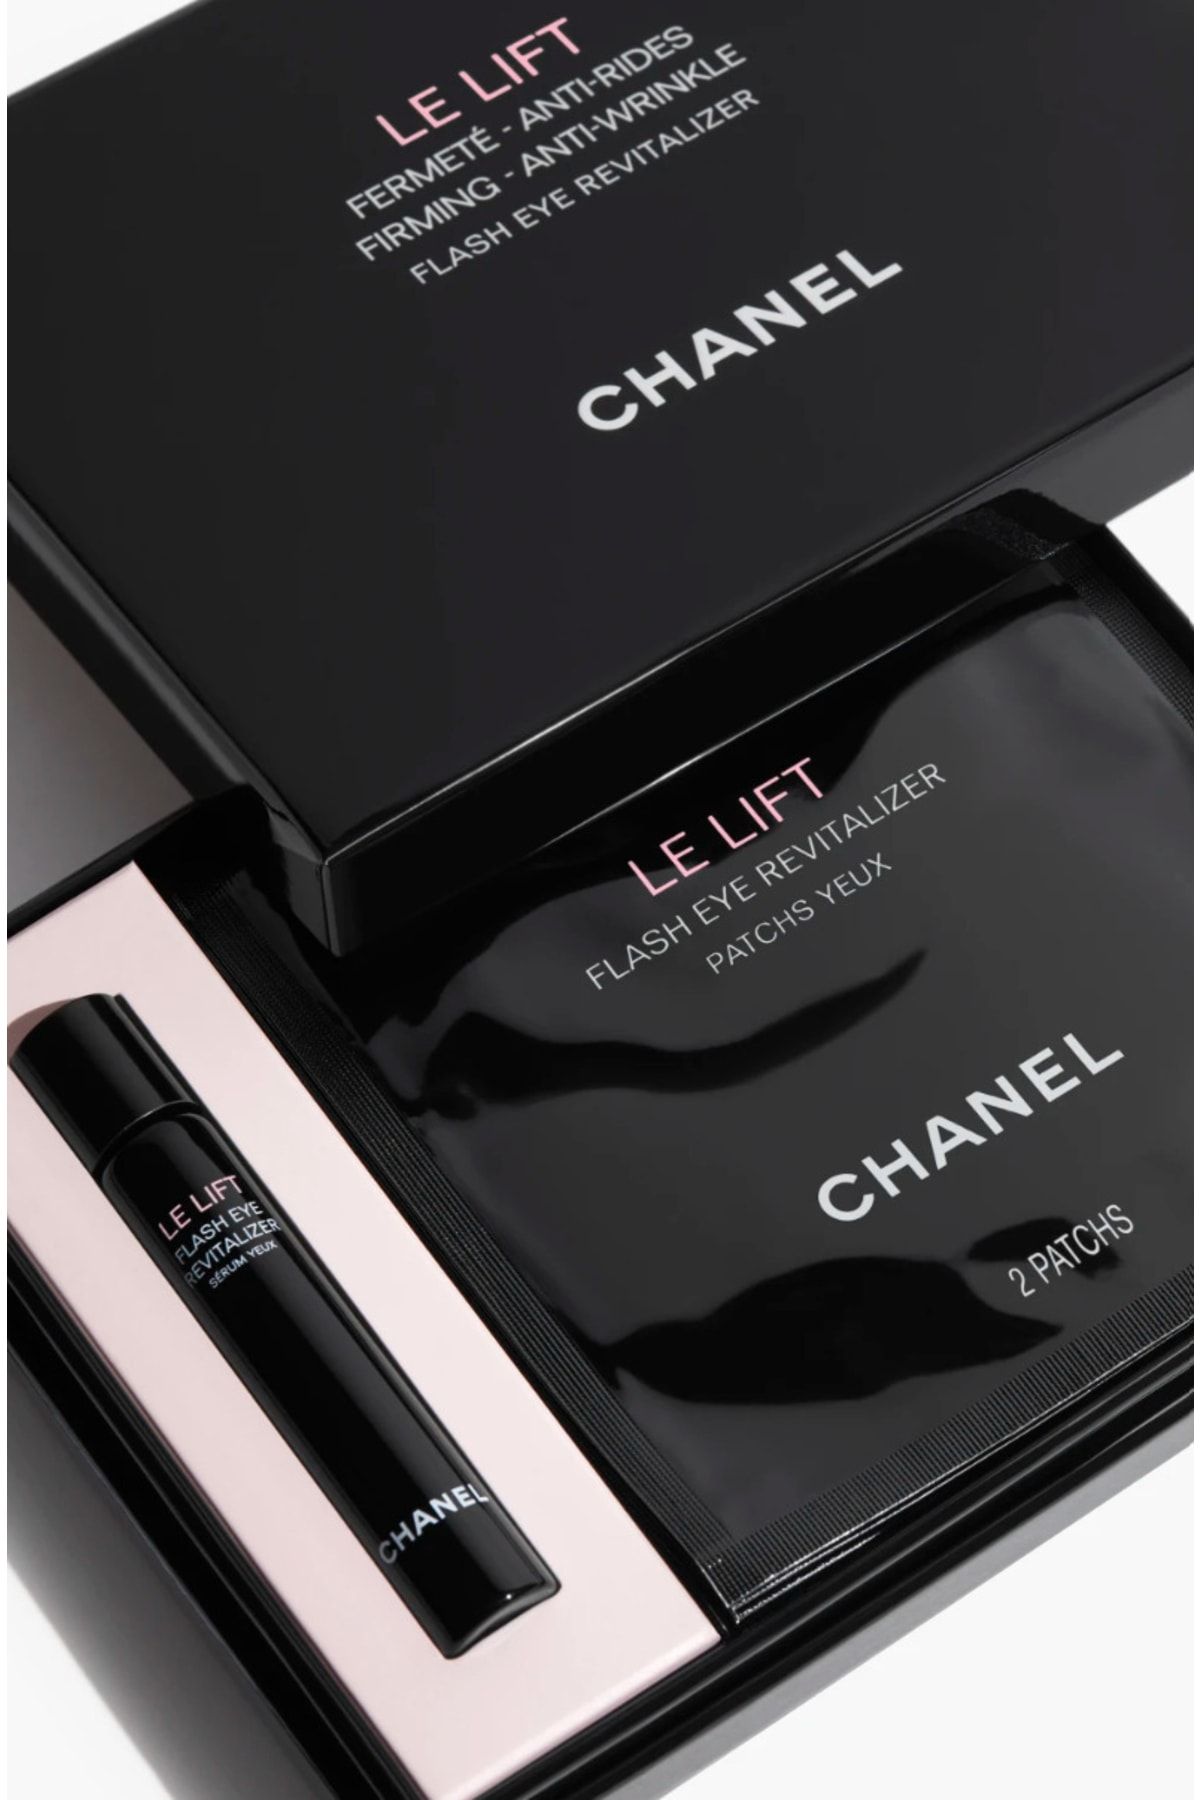 Chanel لیفت کننده دور چشم Le Lift Firming ضد چروک و احیا کننده فوری دور چشم